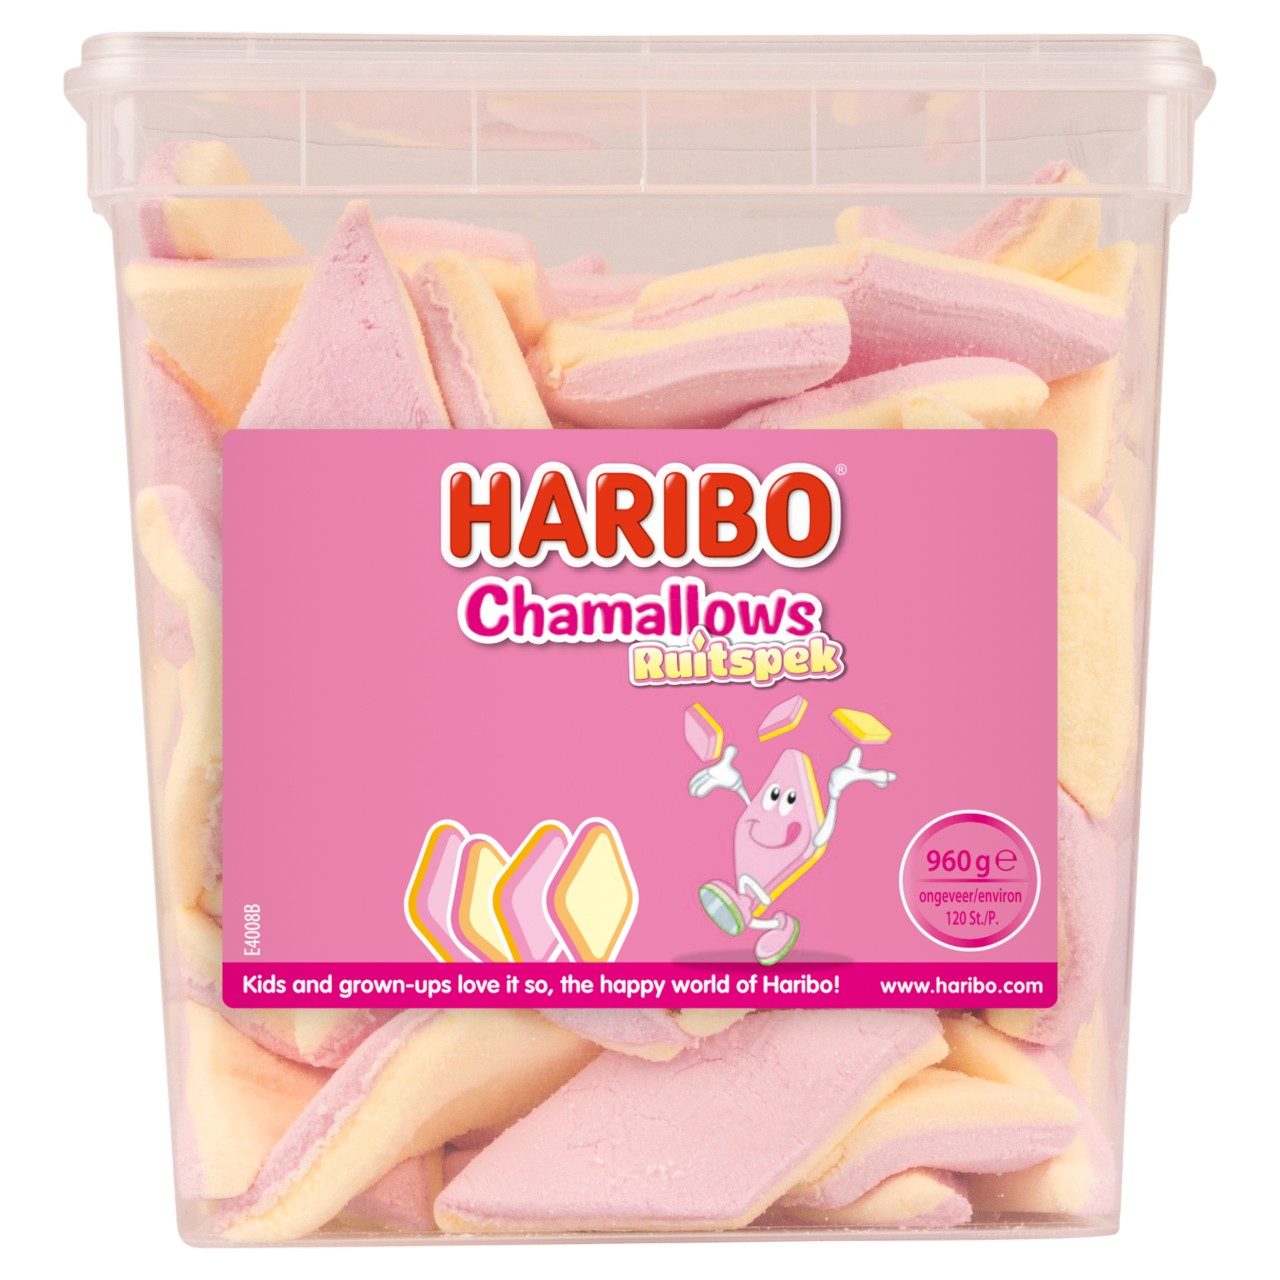 Chamallows ruitspek